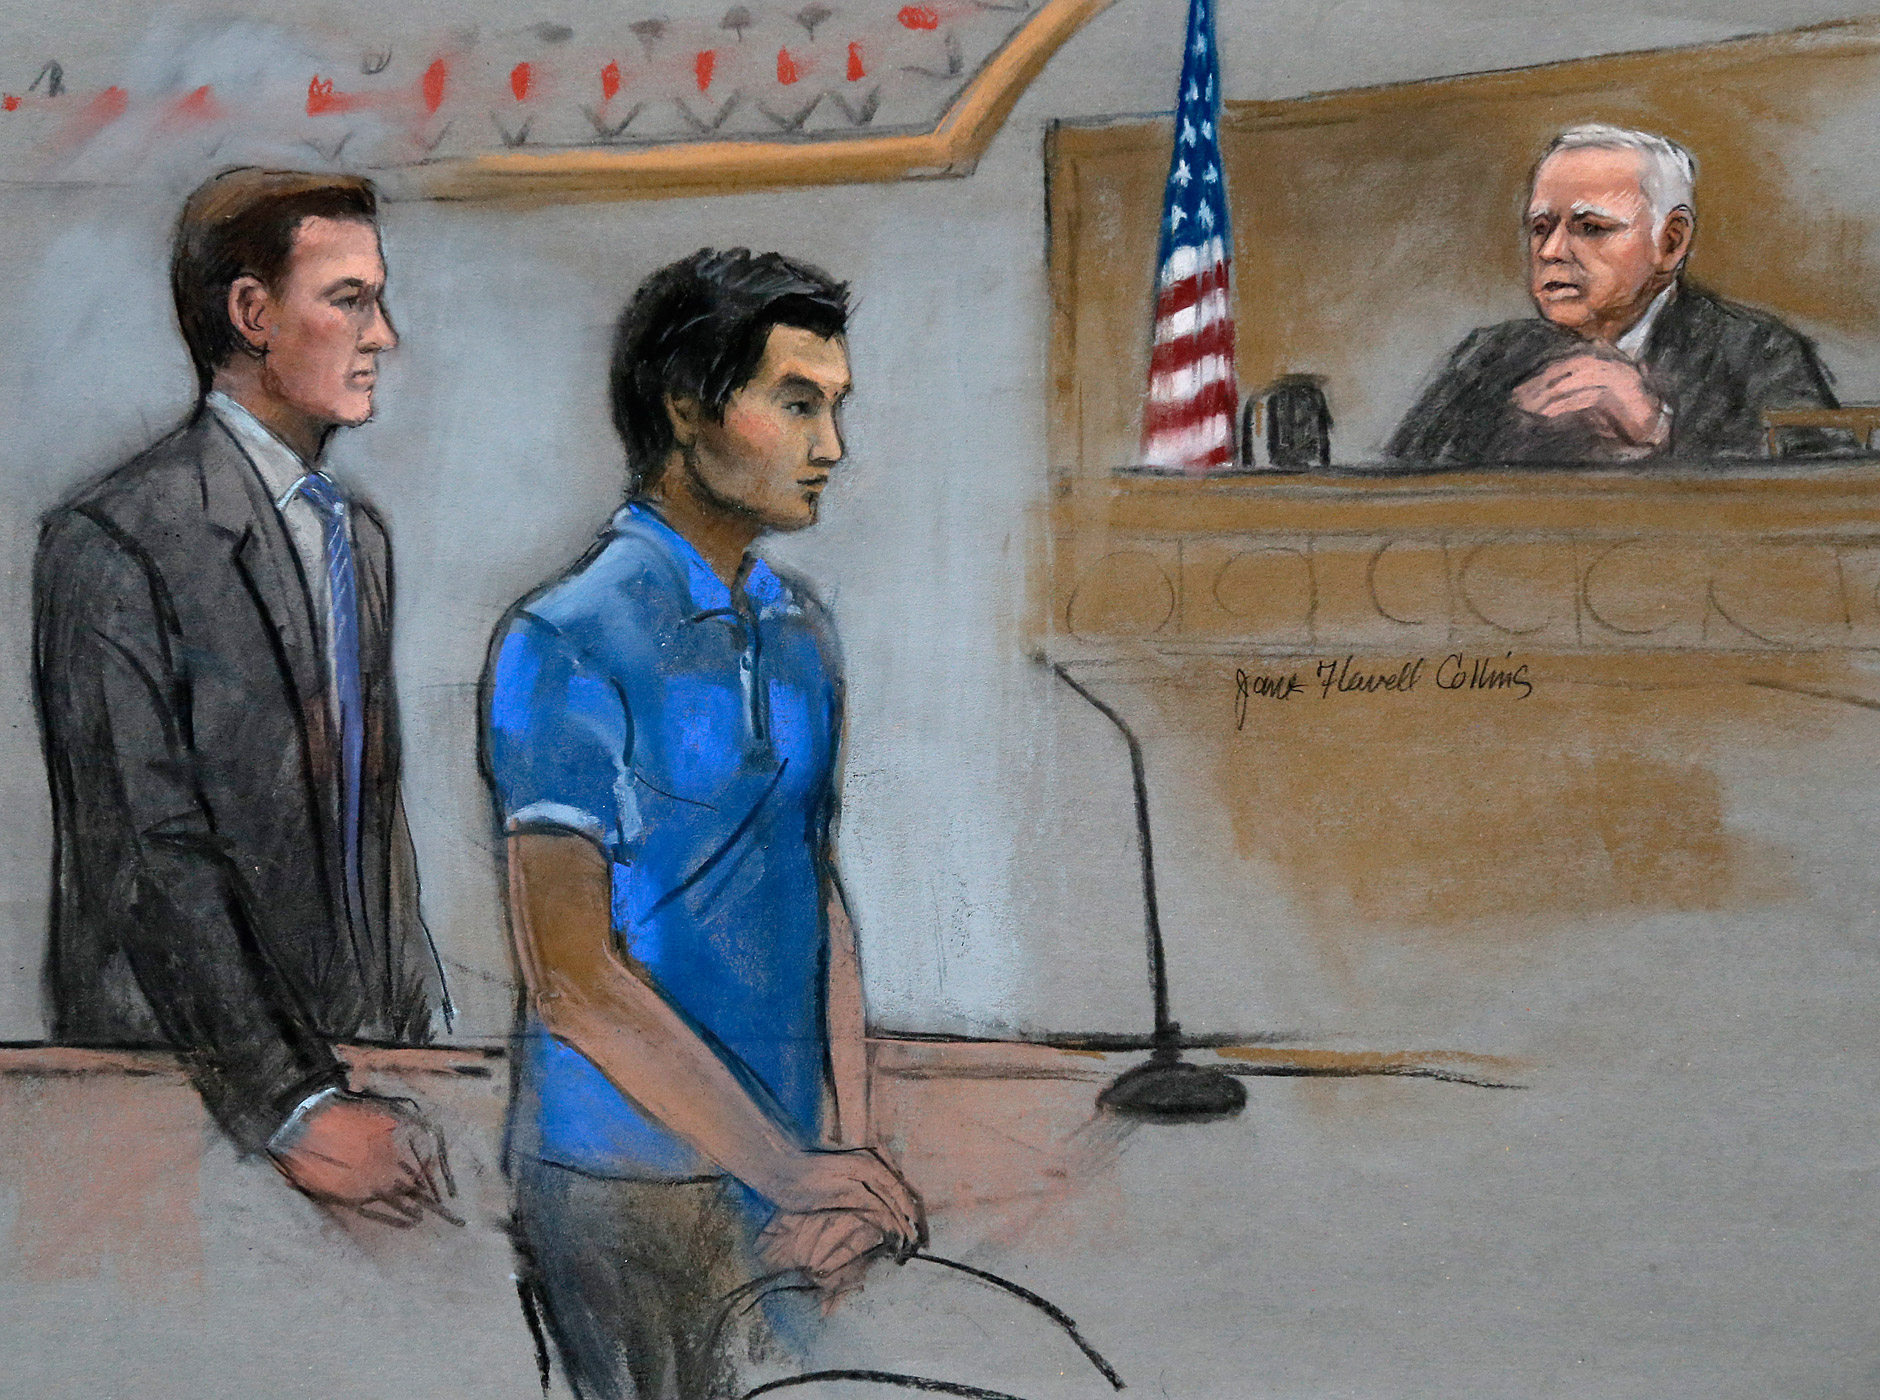 Dias Kadyrbayev, center, a college friend of Boston Marathon bombing suspect Dzhokhar Tsarnaev, is depicted in federal court in Boston on Aug. 21, 2014. (Jane Flavell Collins—AP)